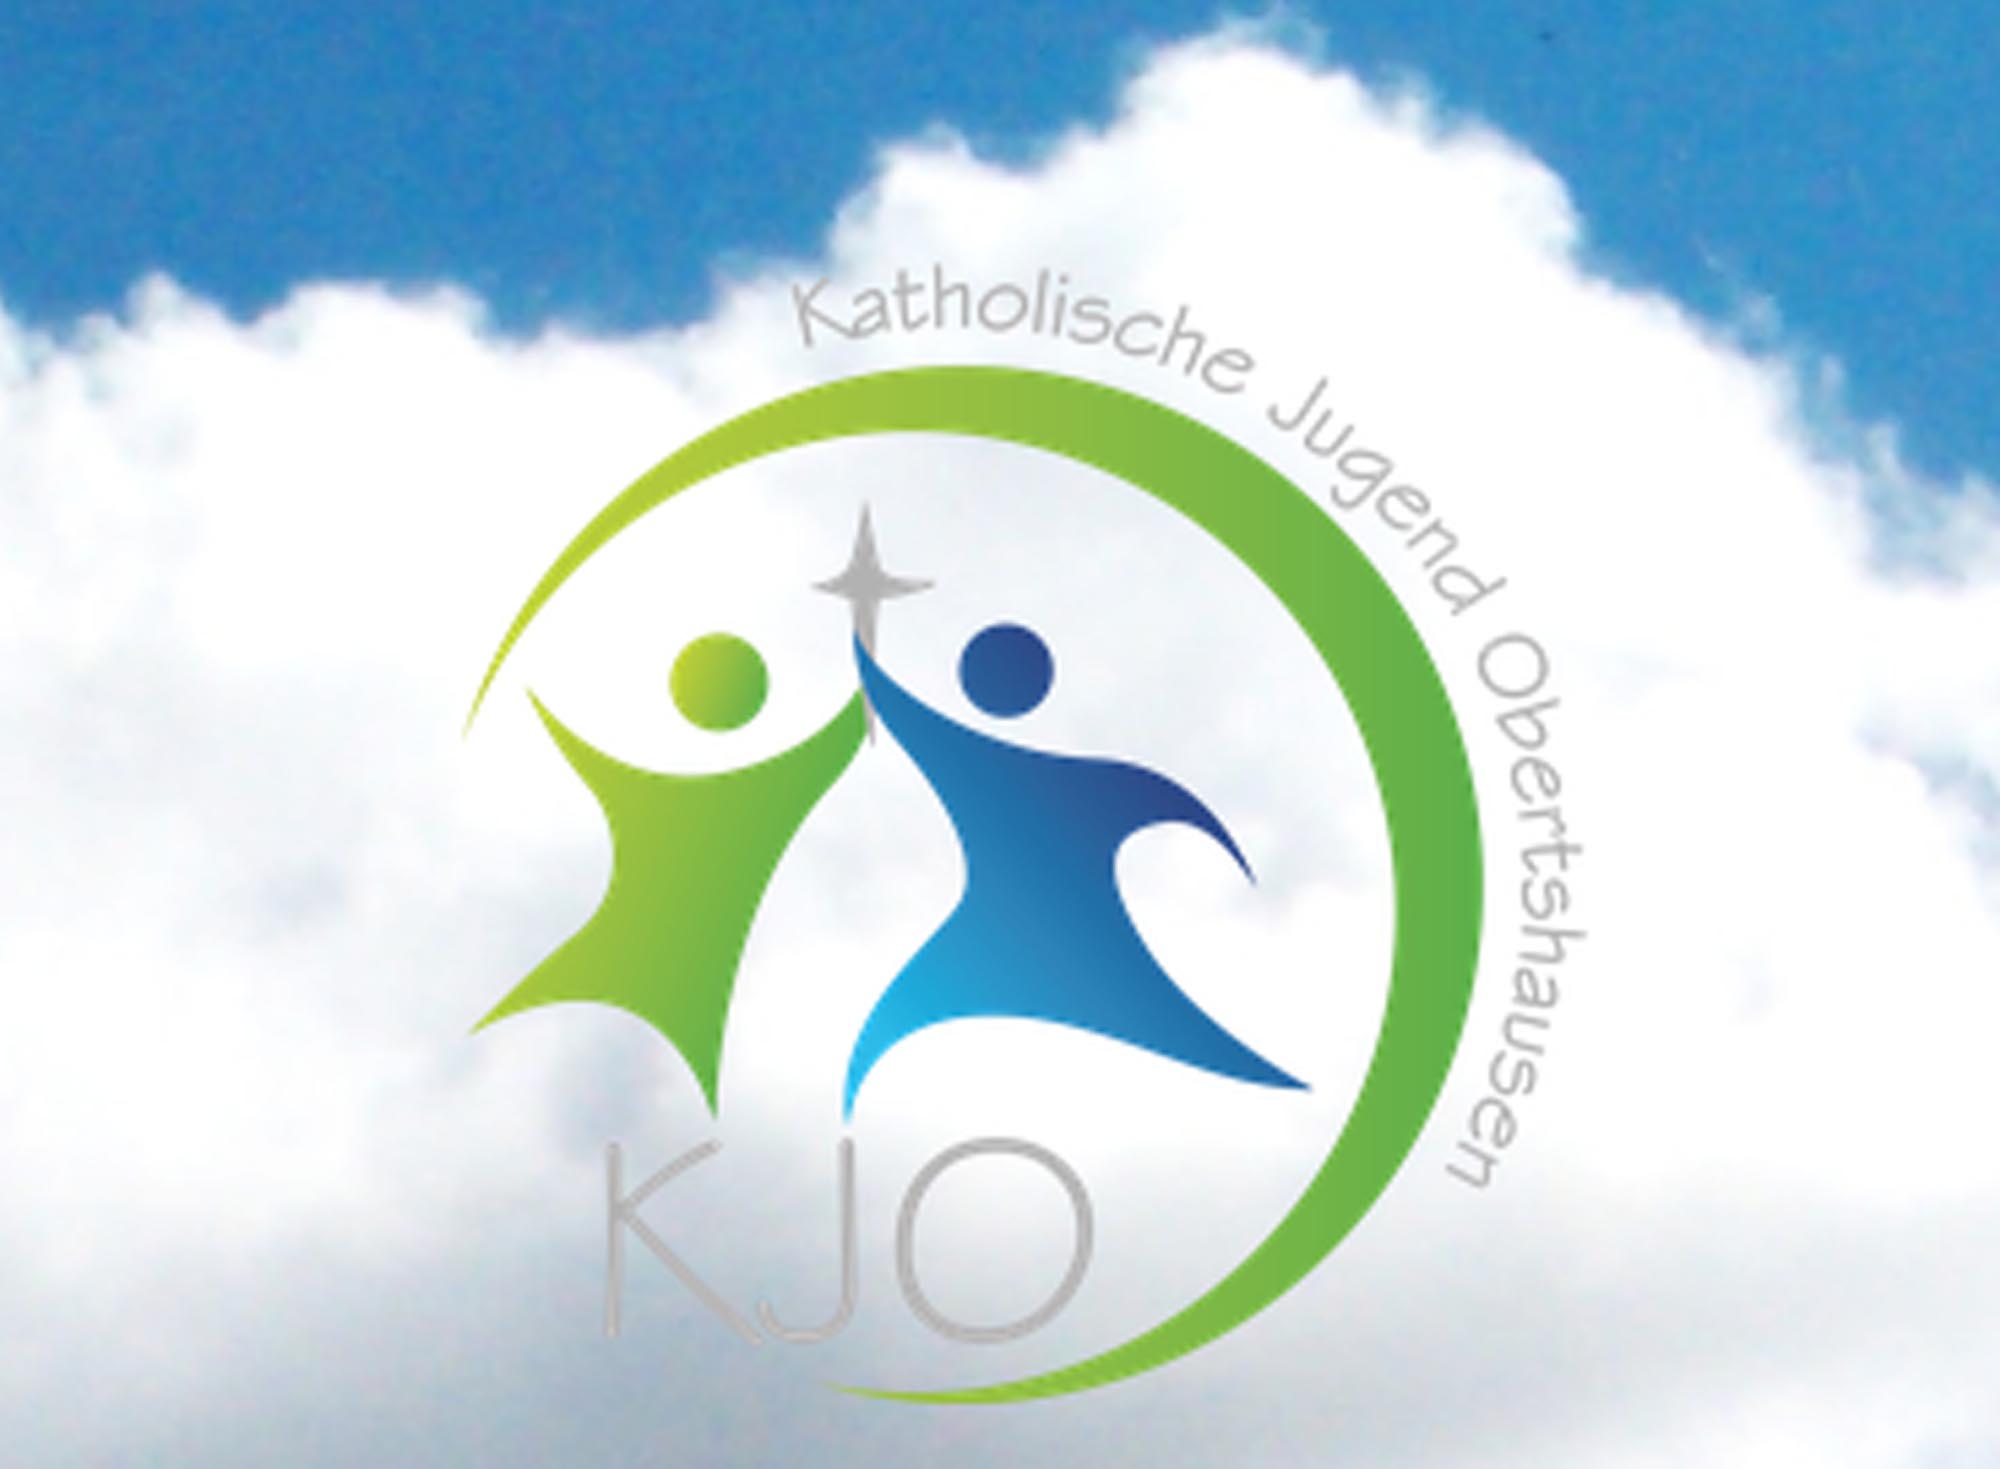 KJO_Katholische Jugend Obertshausen_Logo (c) KJO_Katholische Jugend Obertshausen